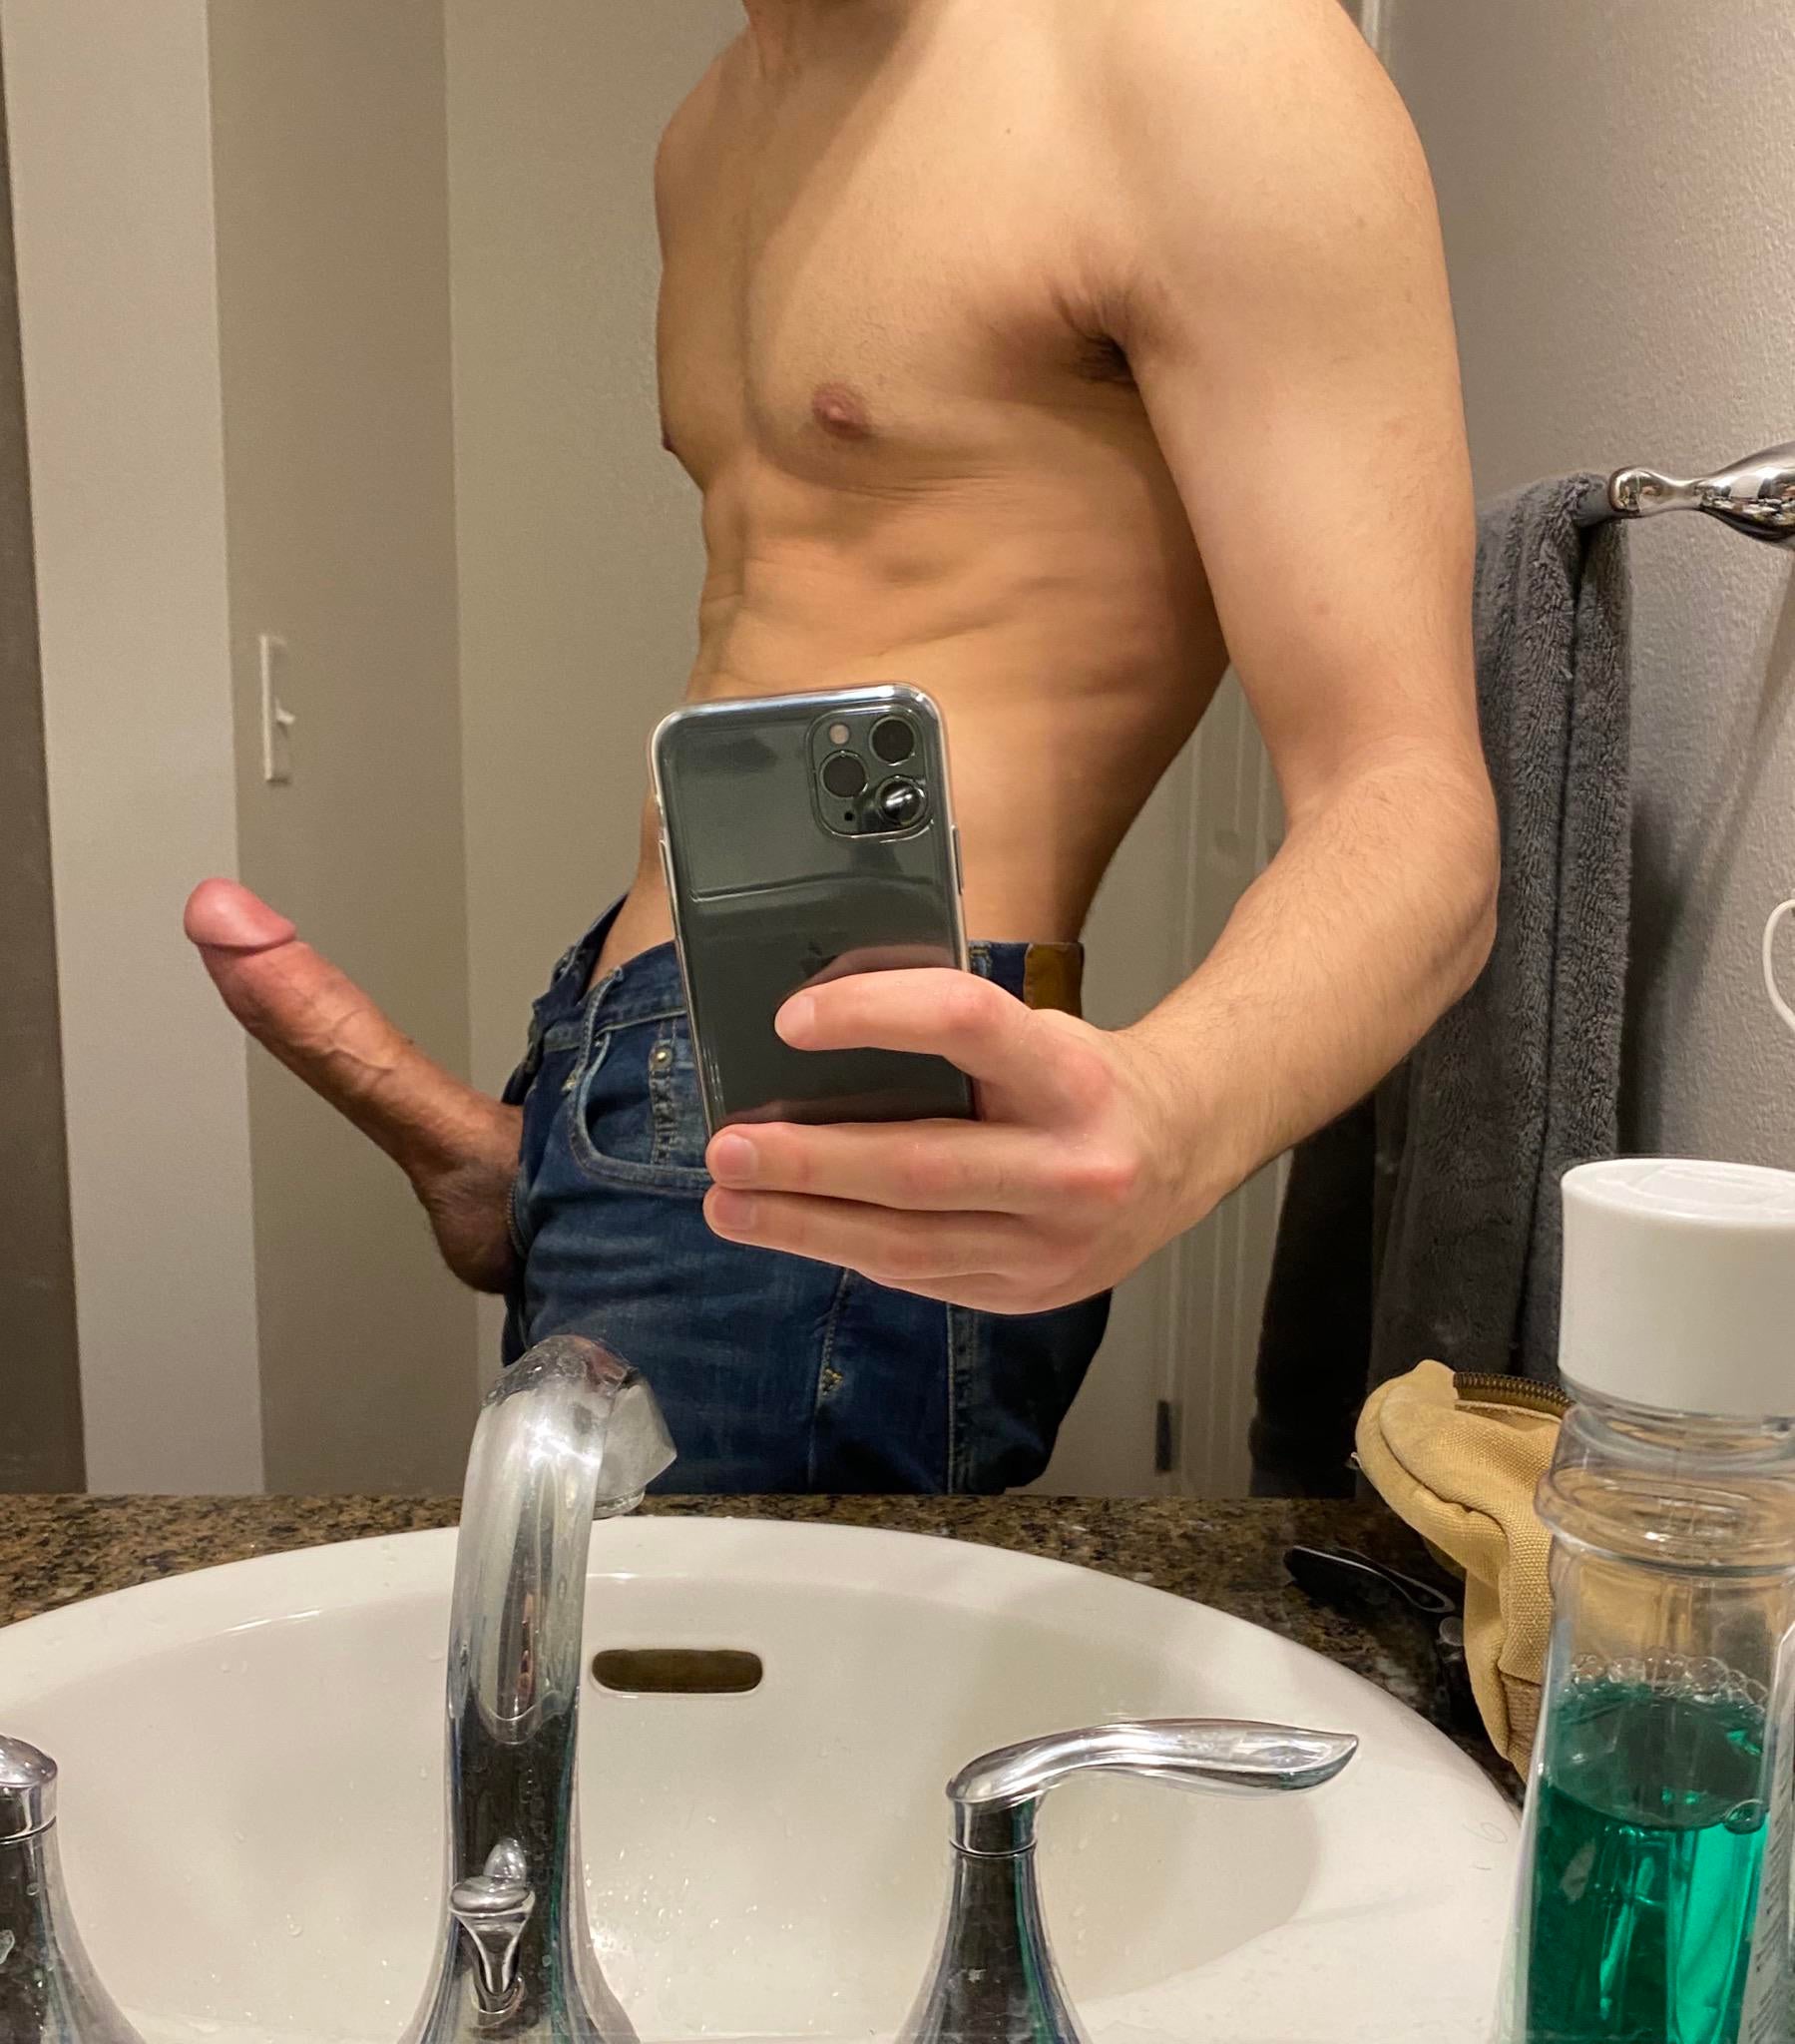 Dick pic mirror selfie